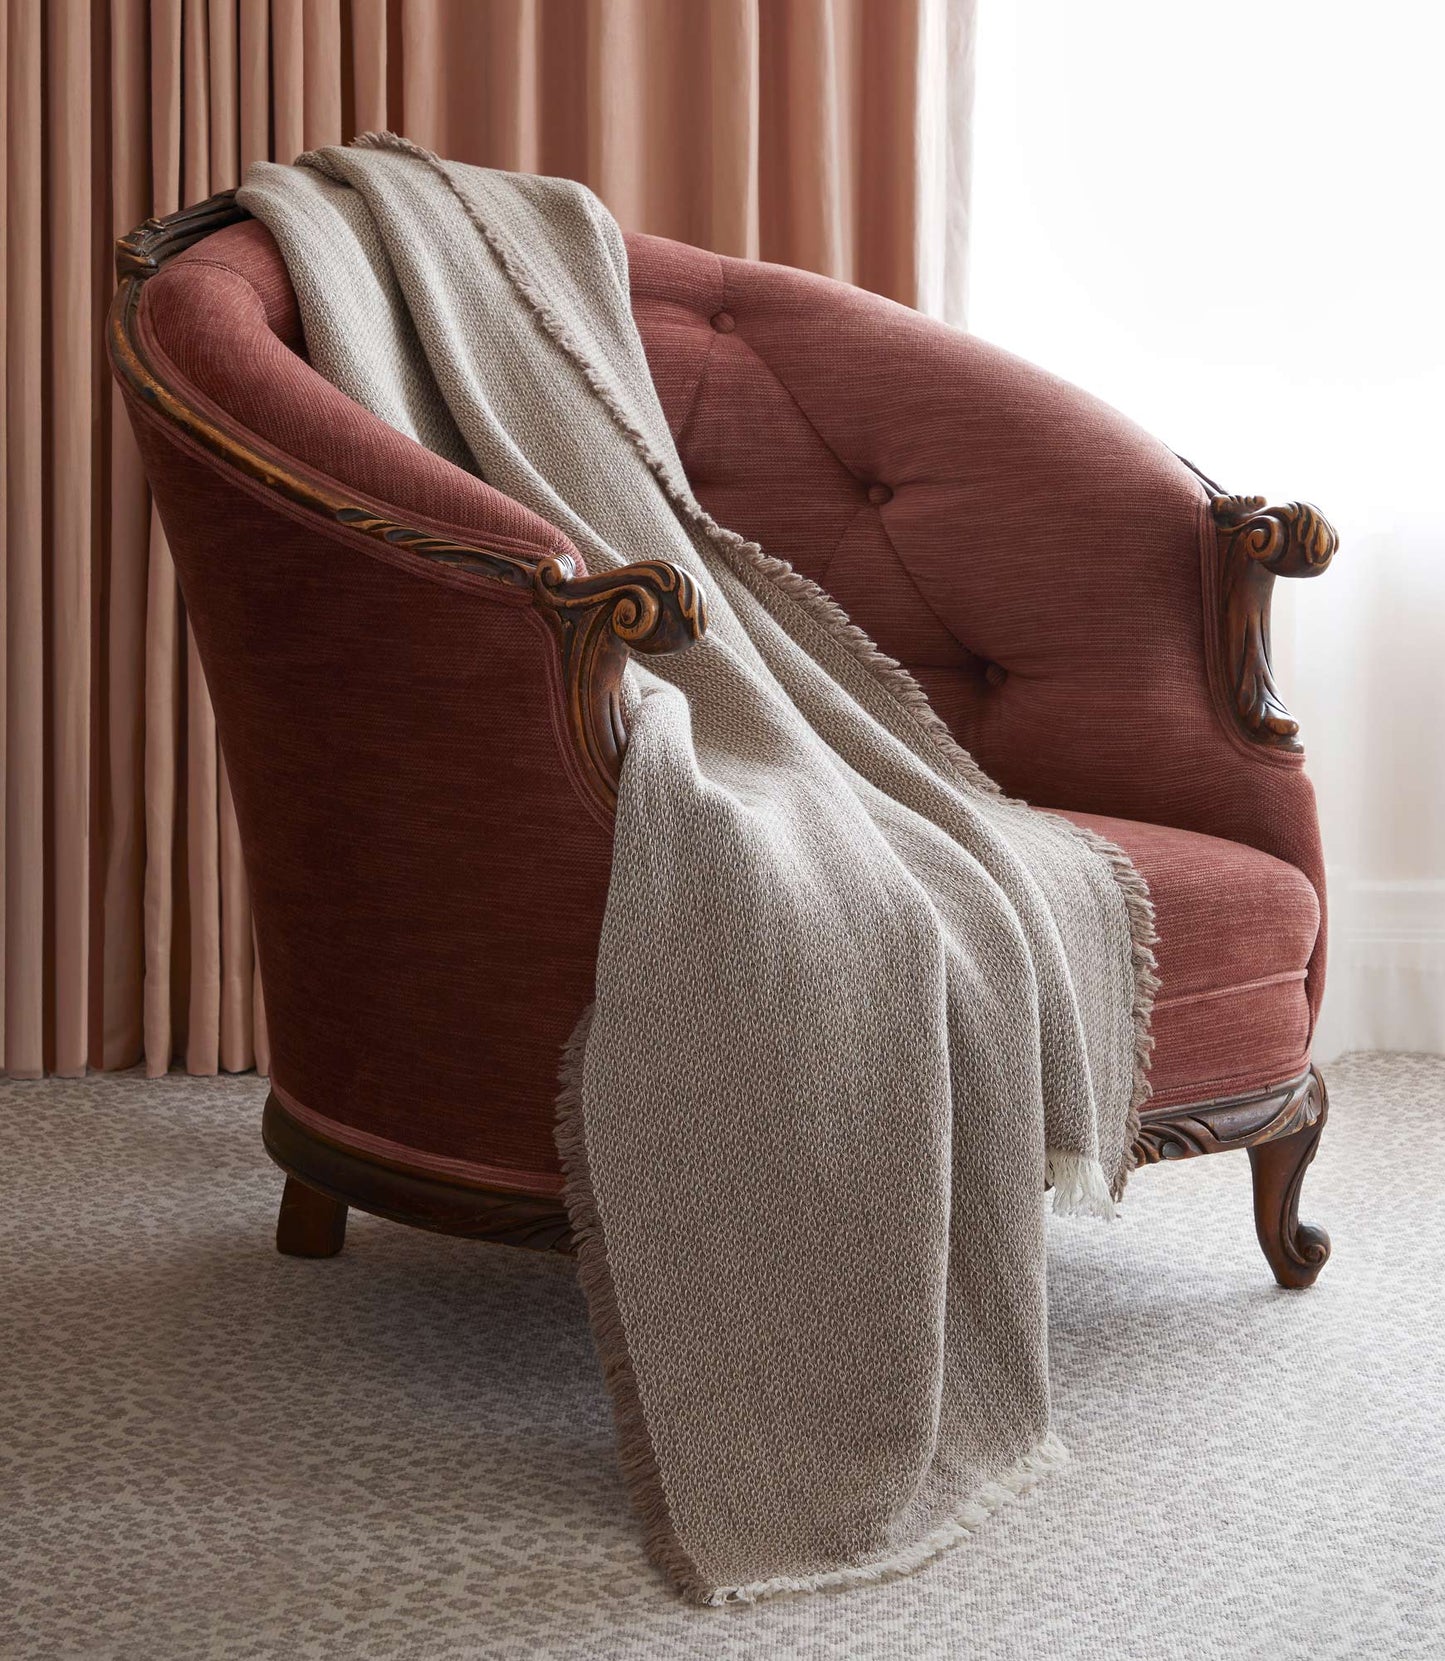 Telluride Wool Throw Blanket Mocha on Chair